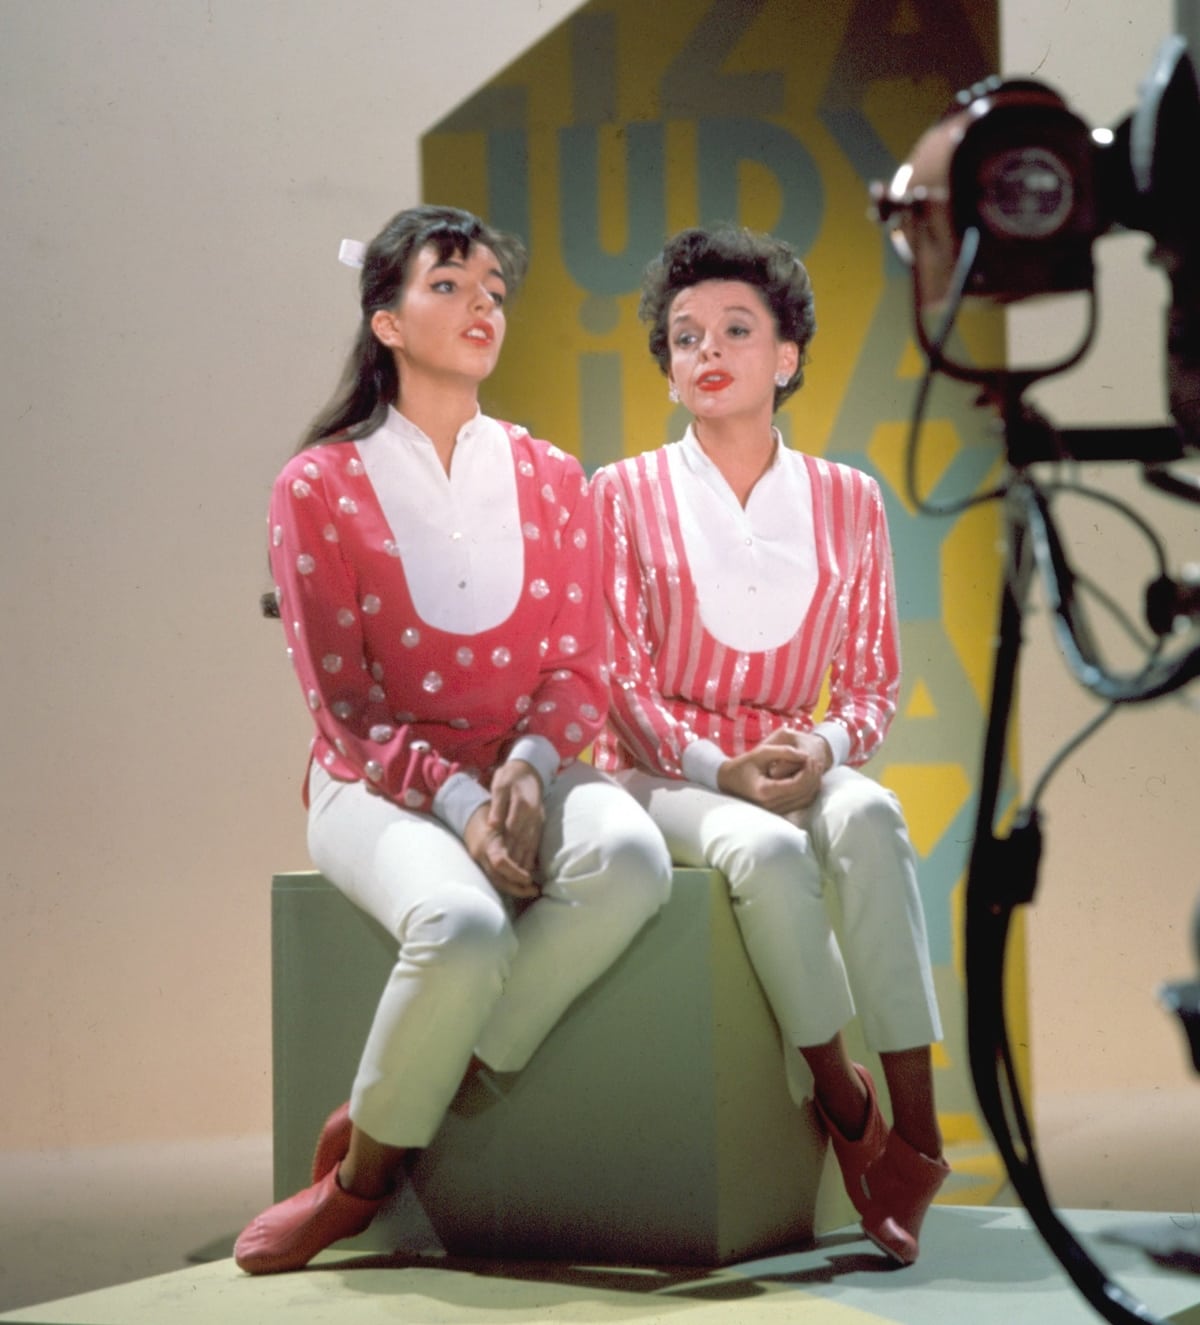 Liza Minnelli and her mom Judy Garland (born Frances Ethel Gumm) on The Judy Garland Show